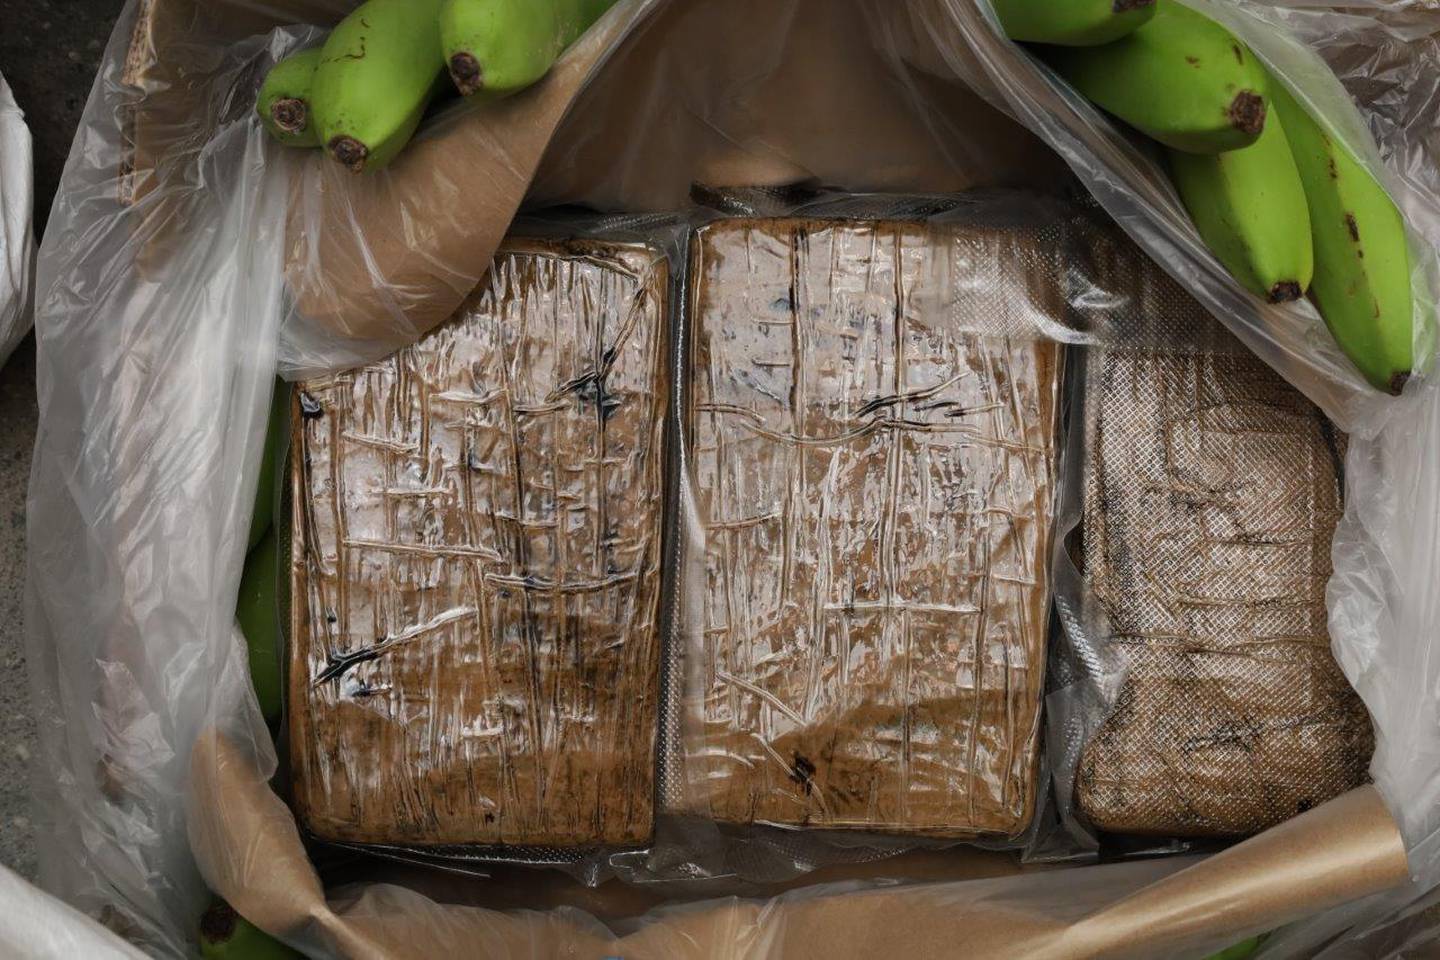 Kokainet var gjemt i banankasser som kom fra Tyskland. Foto: Oslo politidistrikt / NTB